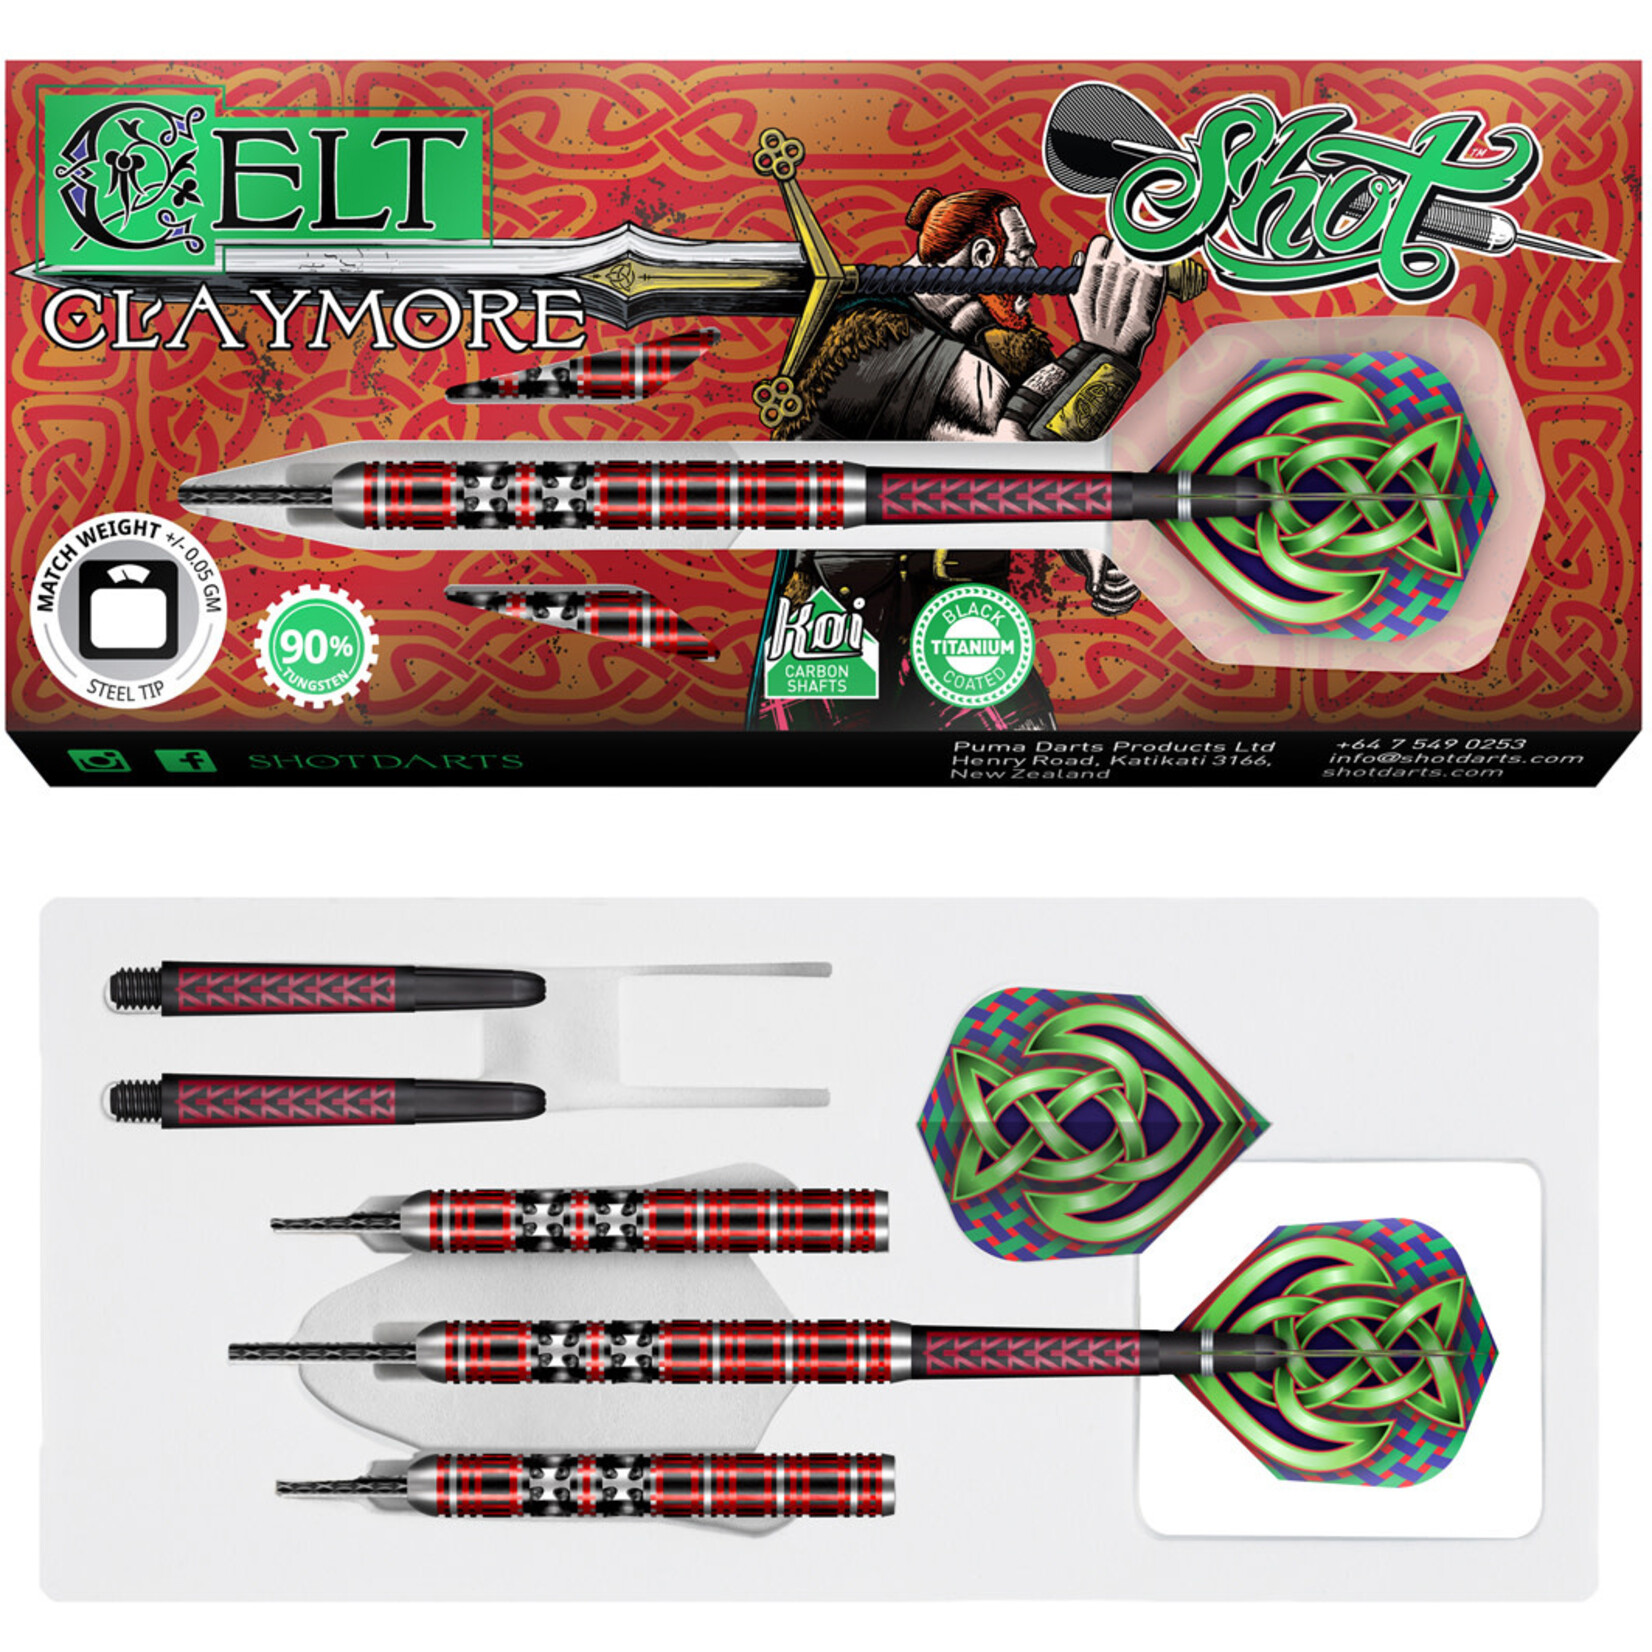 SHOT DARTS Shot Celt Claymore Steel Tip Darts